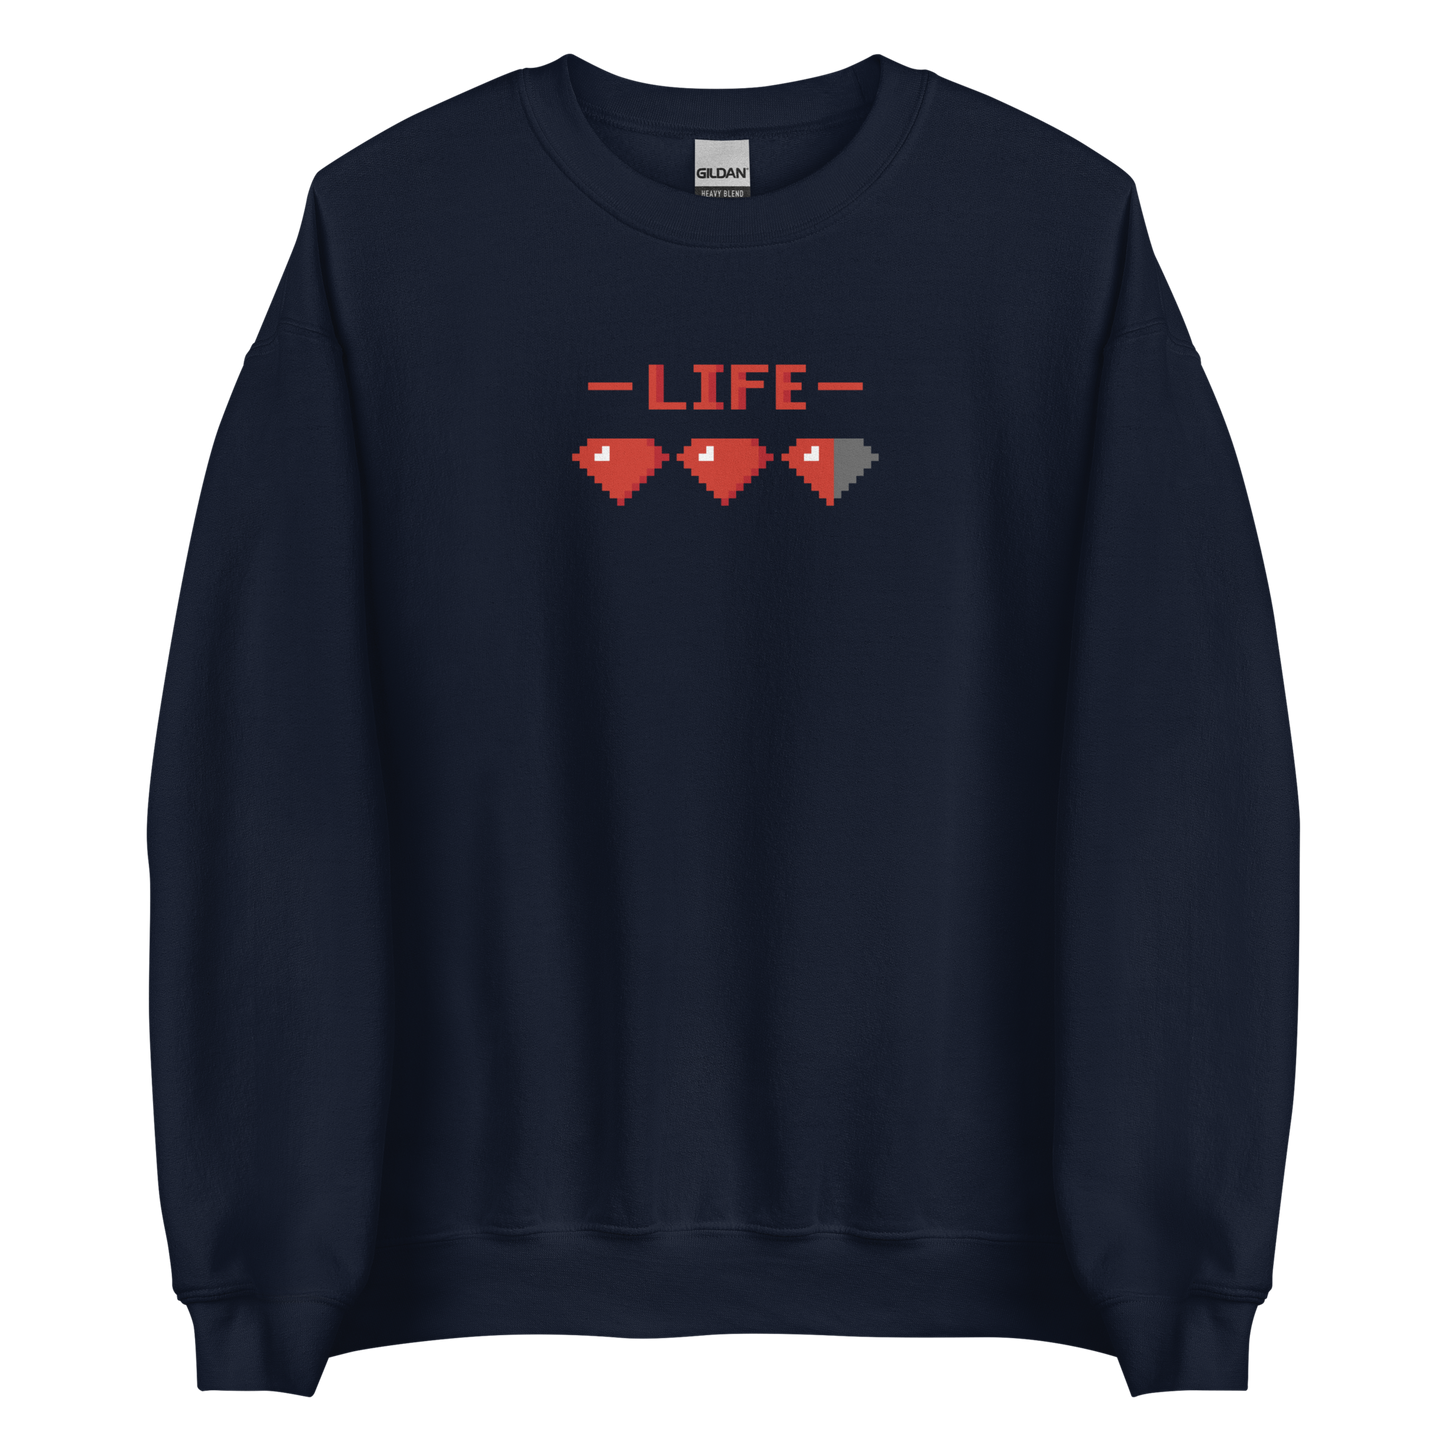 Extra Ruby Life Sweatshirt